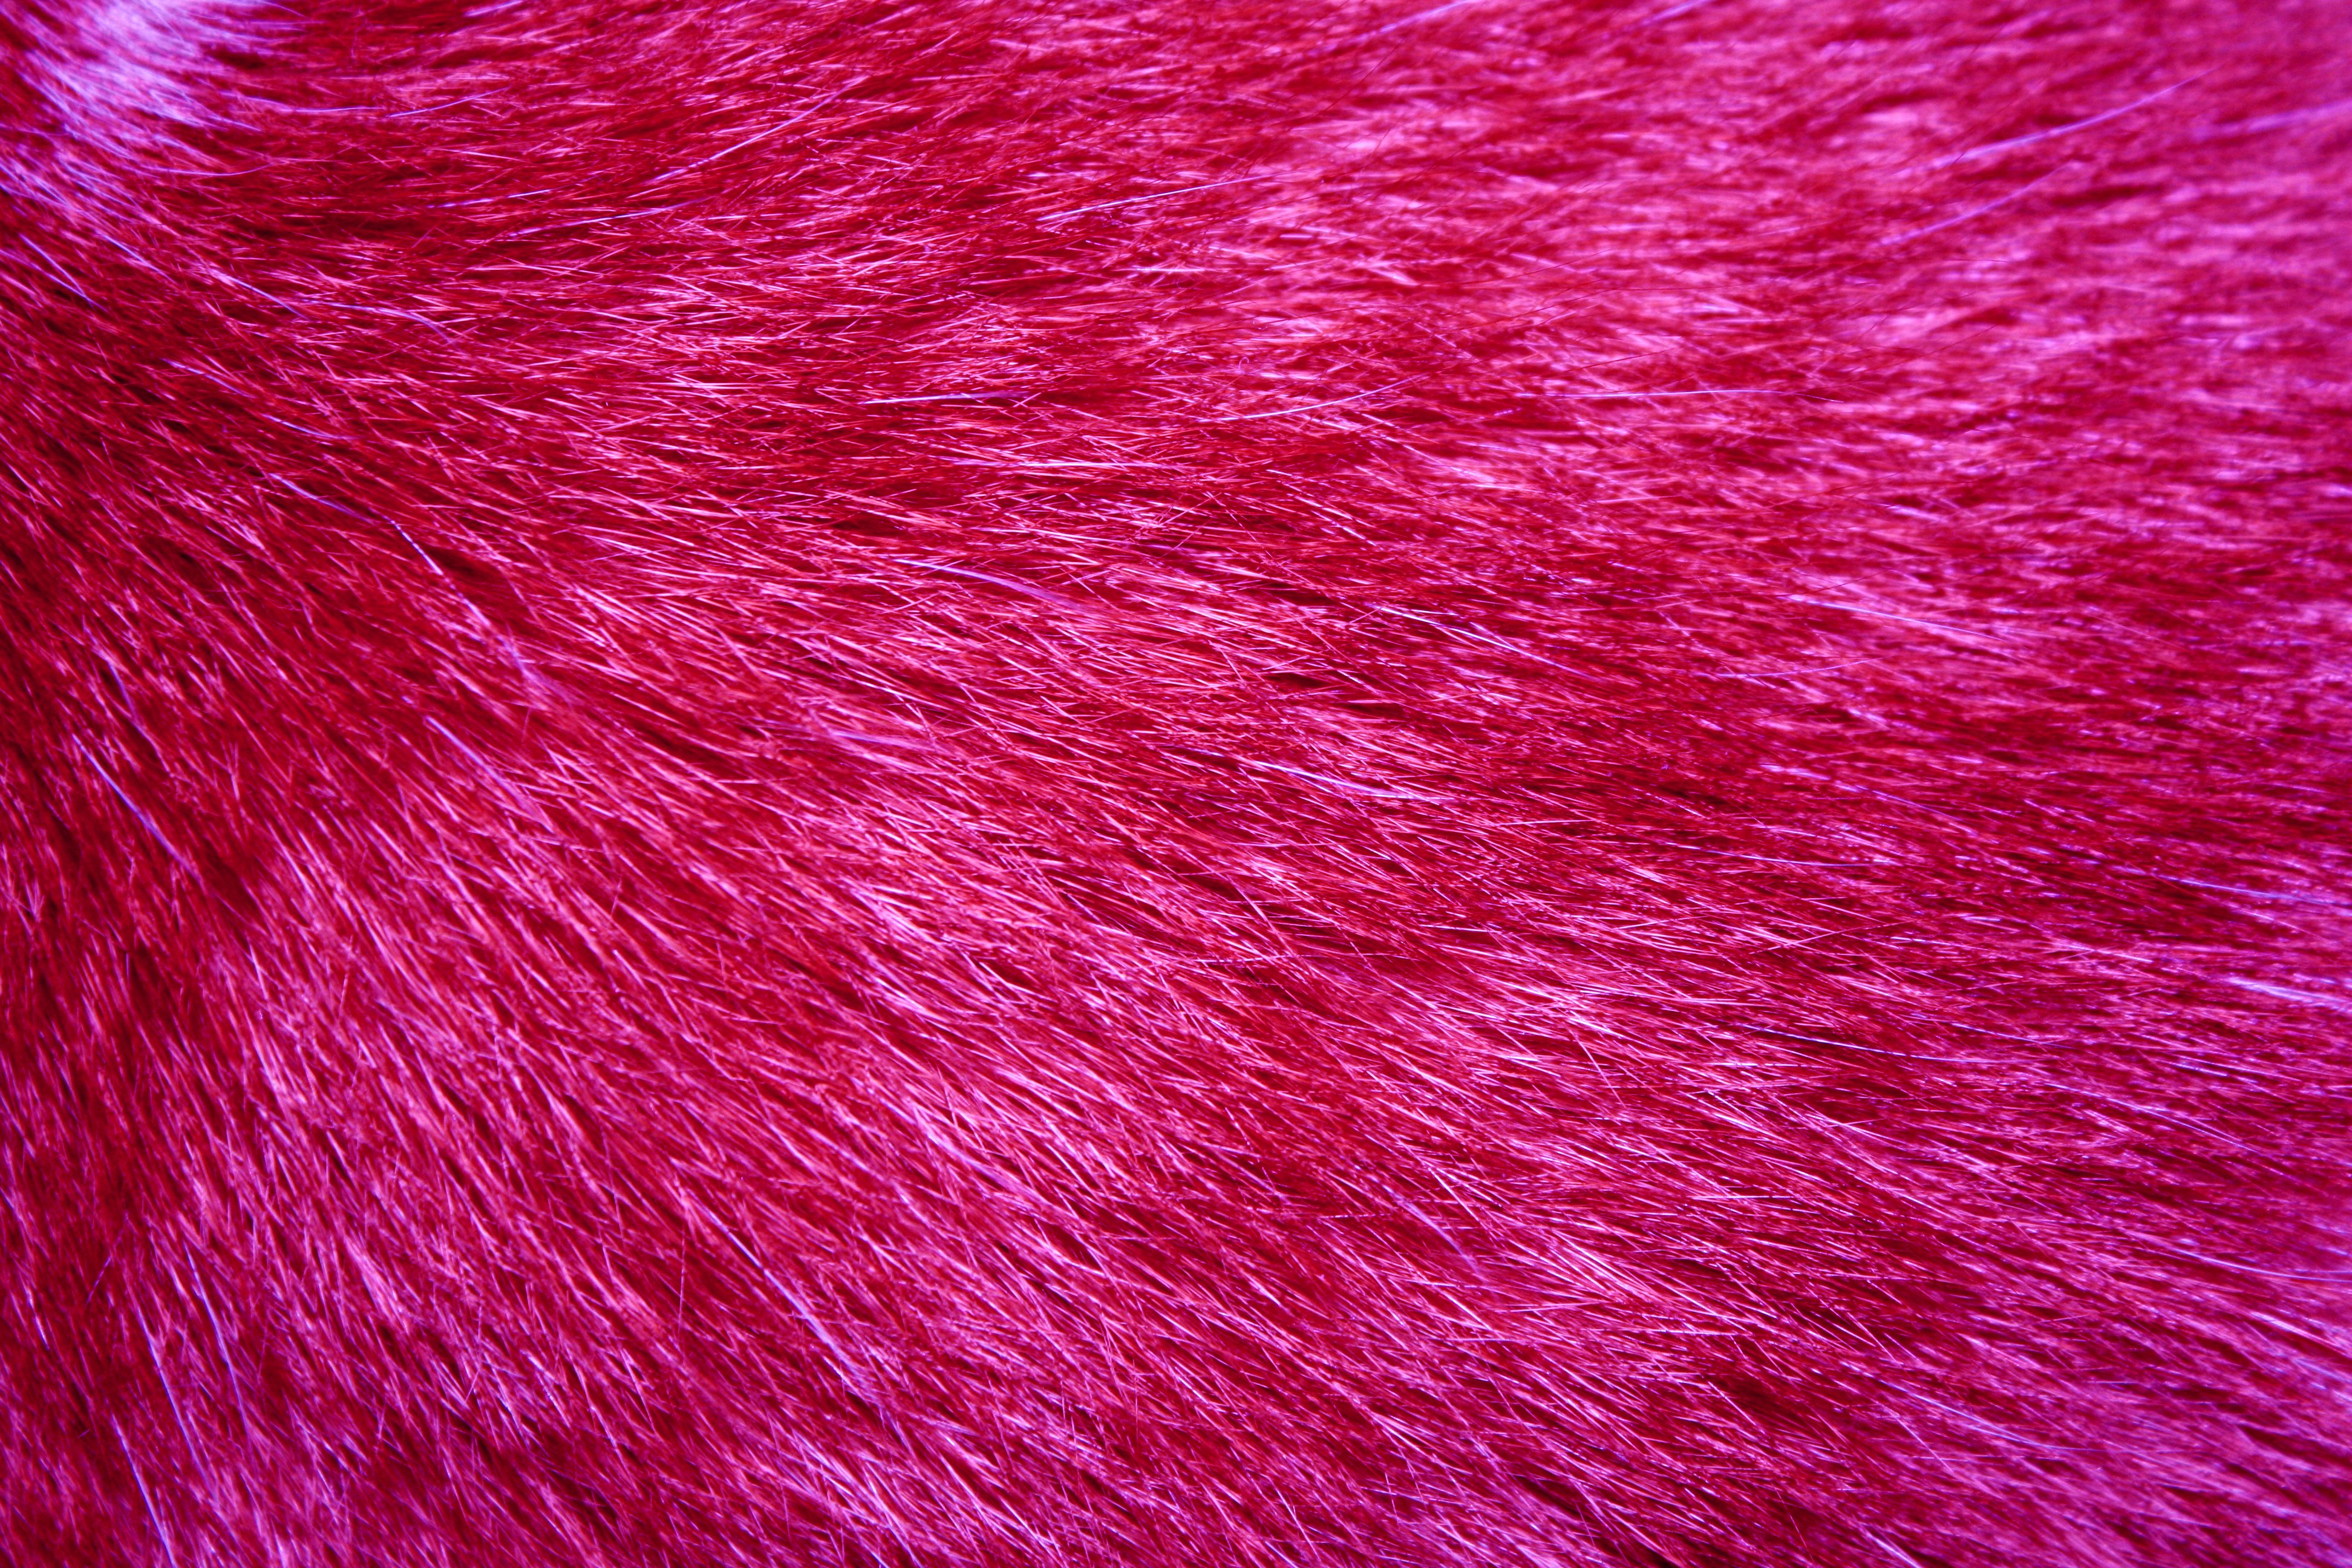 Pink fur wallpaper